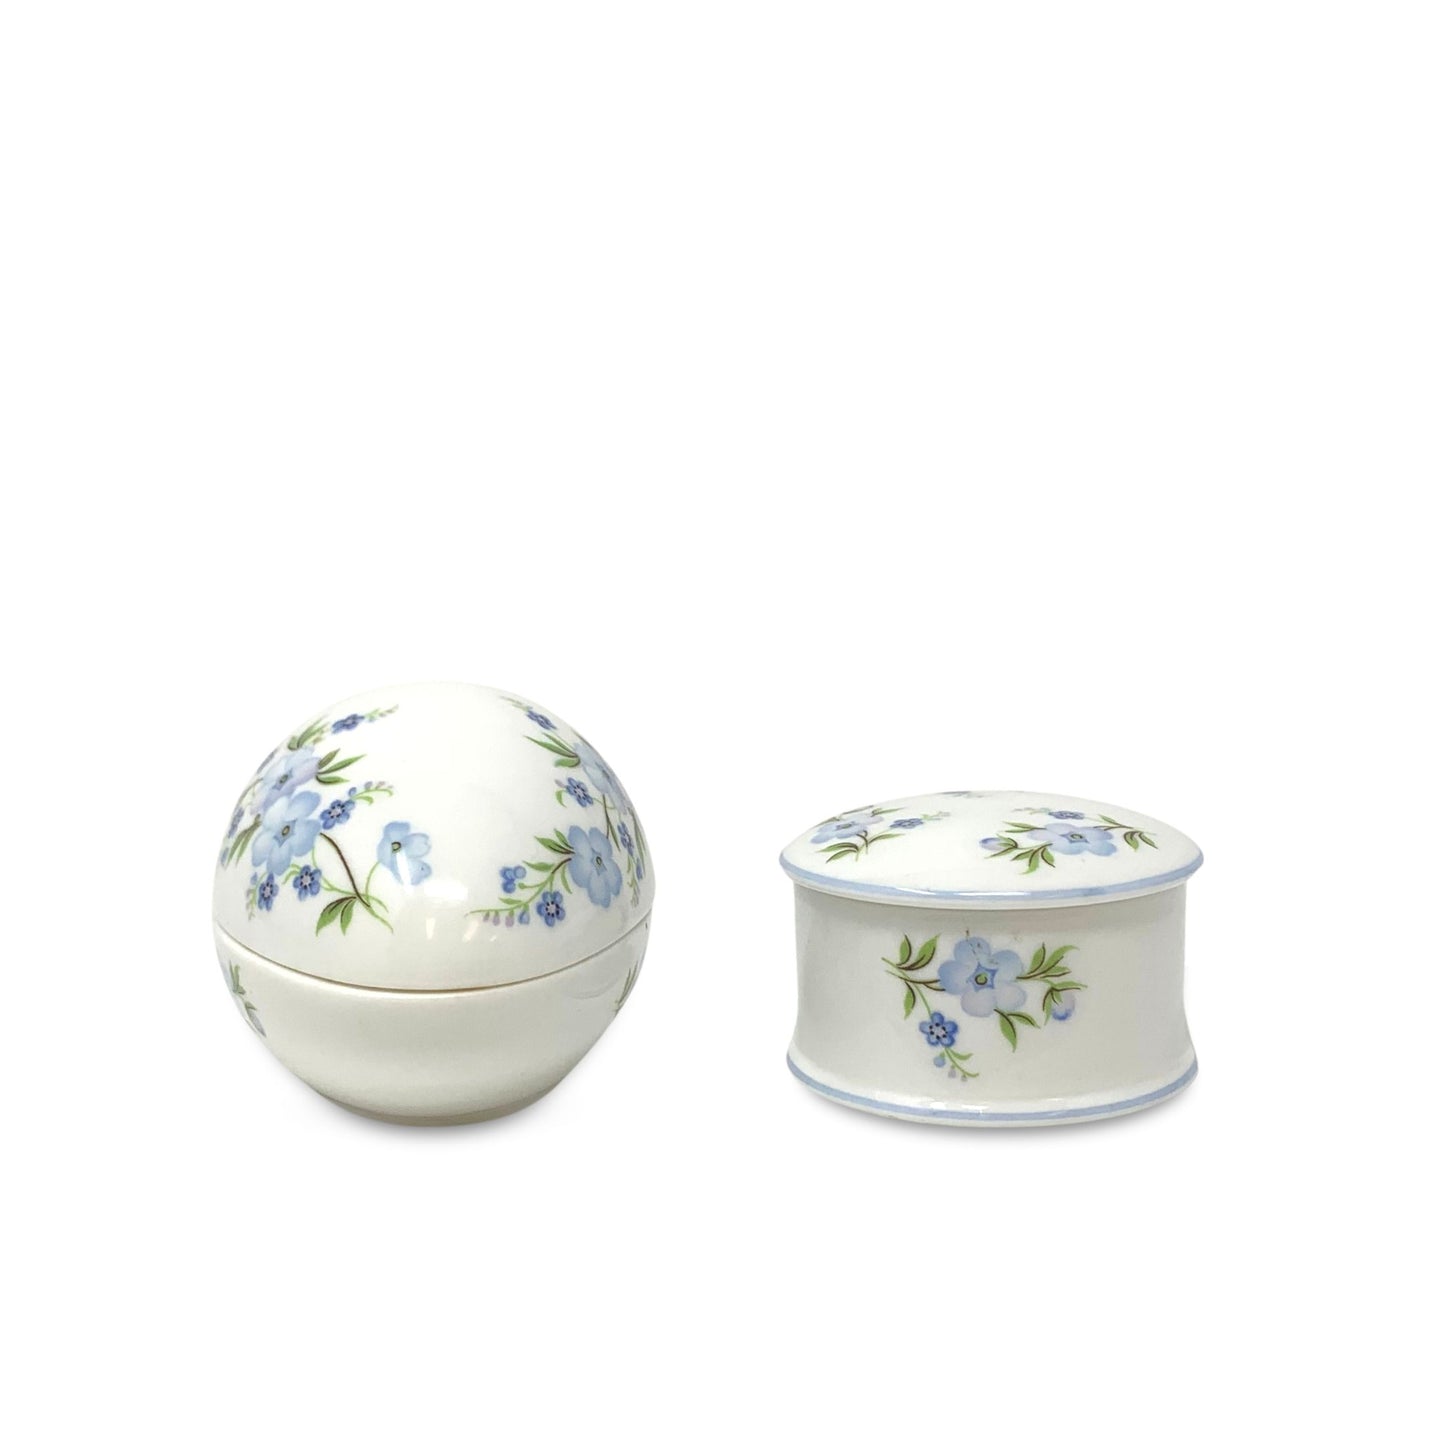 Crown Staffordshire Porcelain "Rock Garden" Trinket Boxes (Pair)